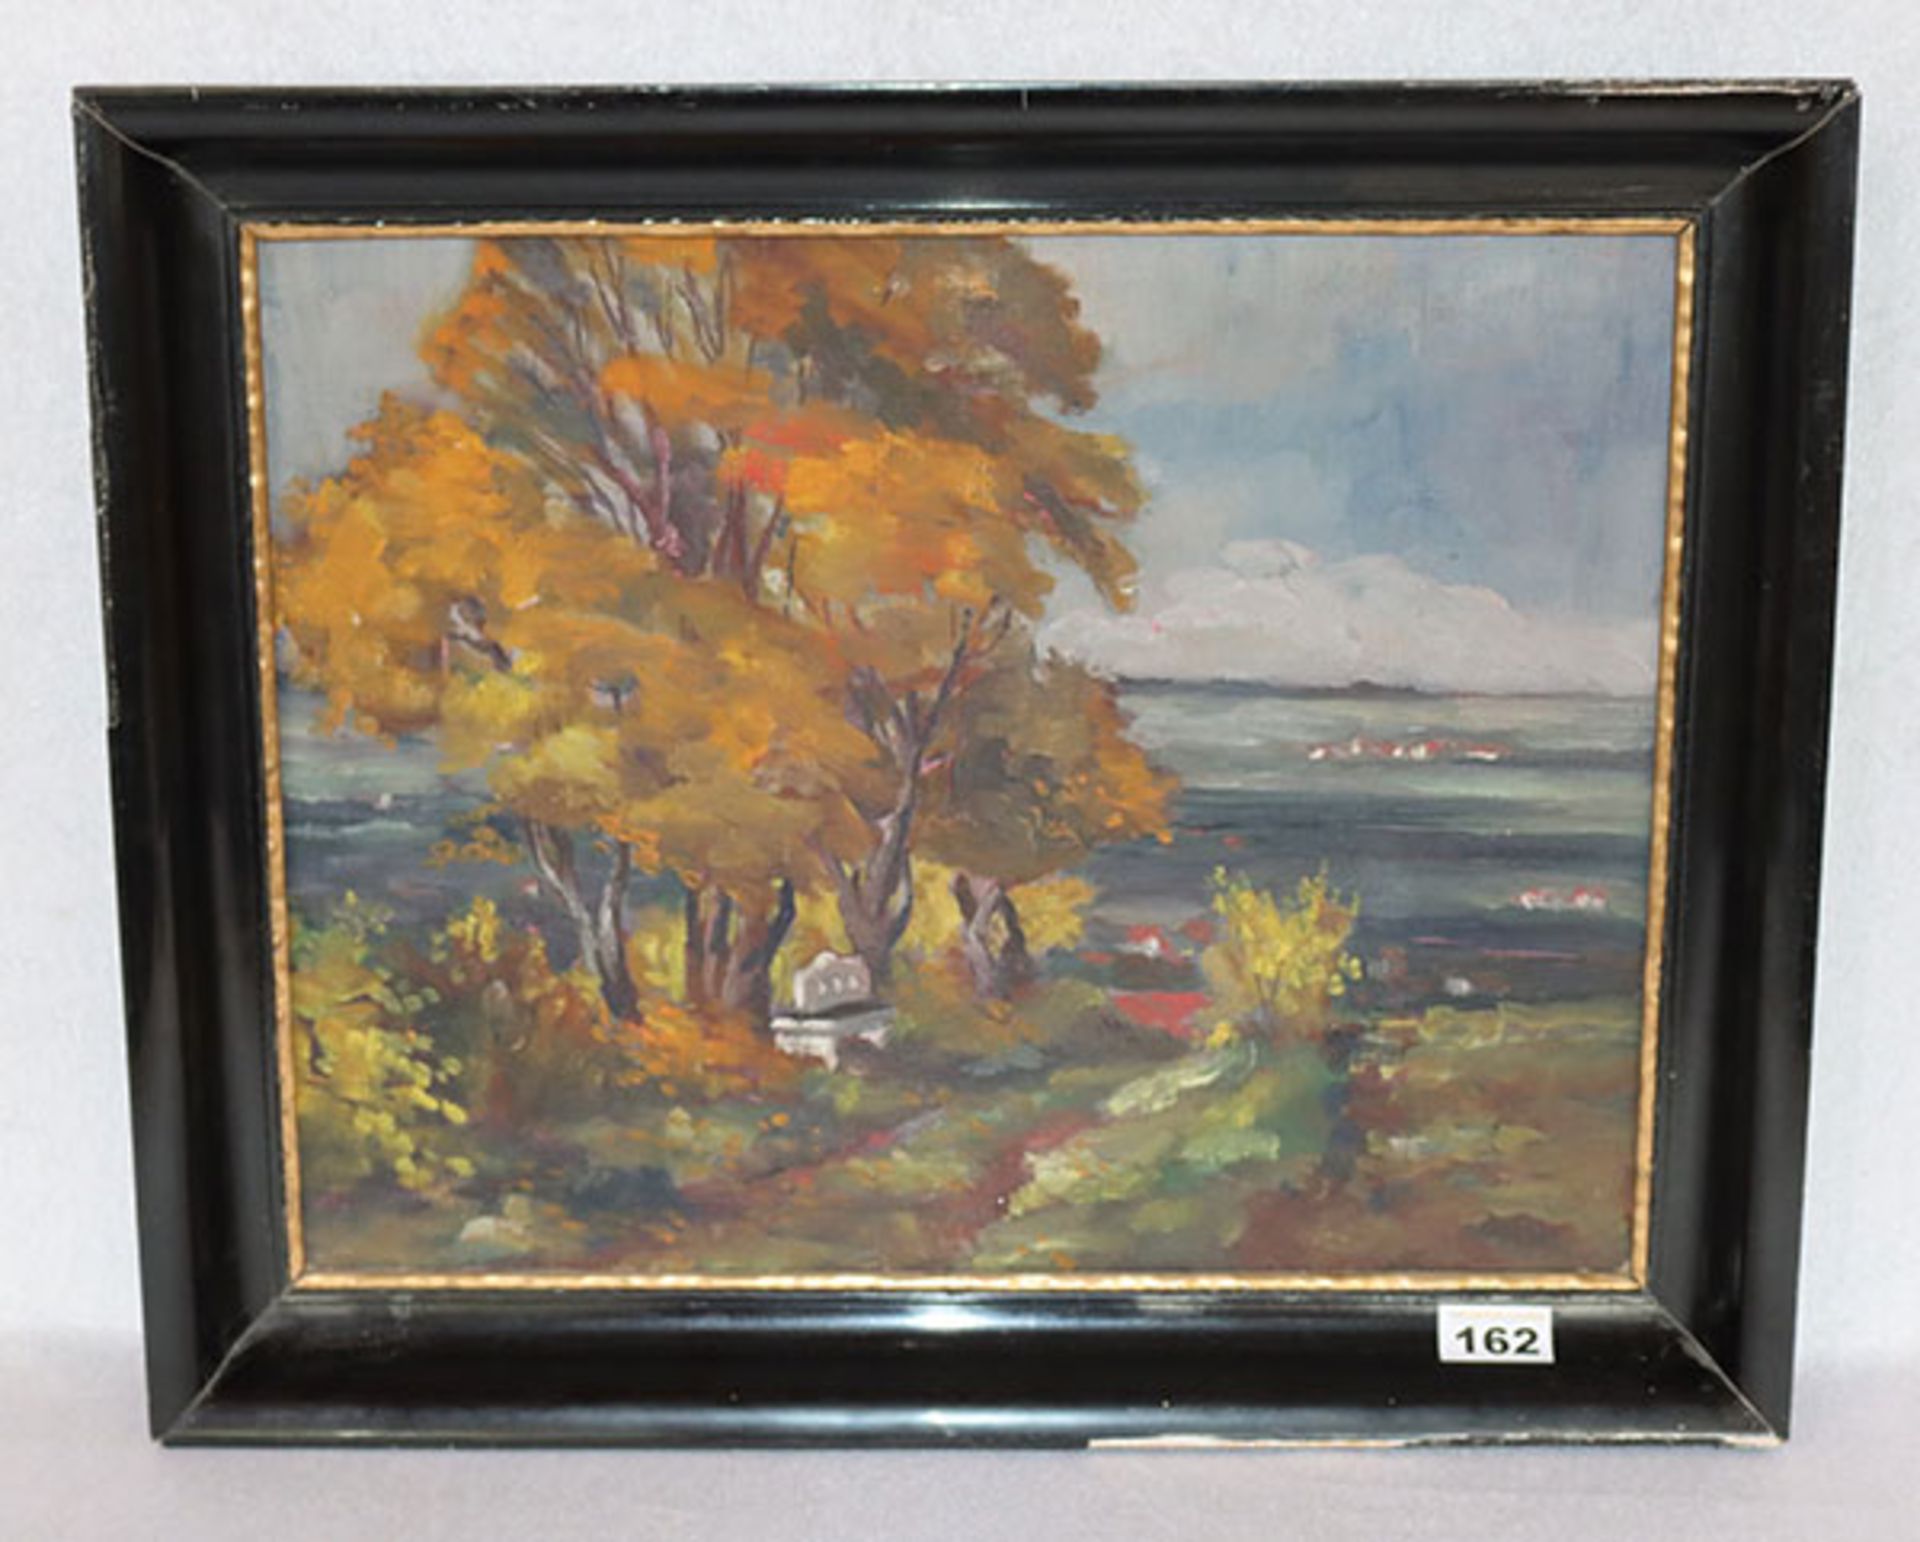 Gemälde ÖL/LW 'Herbstliche Landschafts-Szenerie', gerahmt, Rahmen beschädigt, incl. Rahmen 45,5 cm x